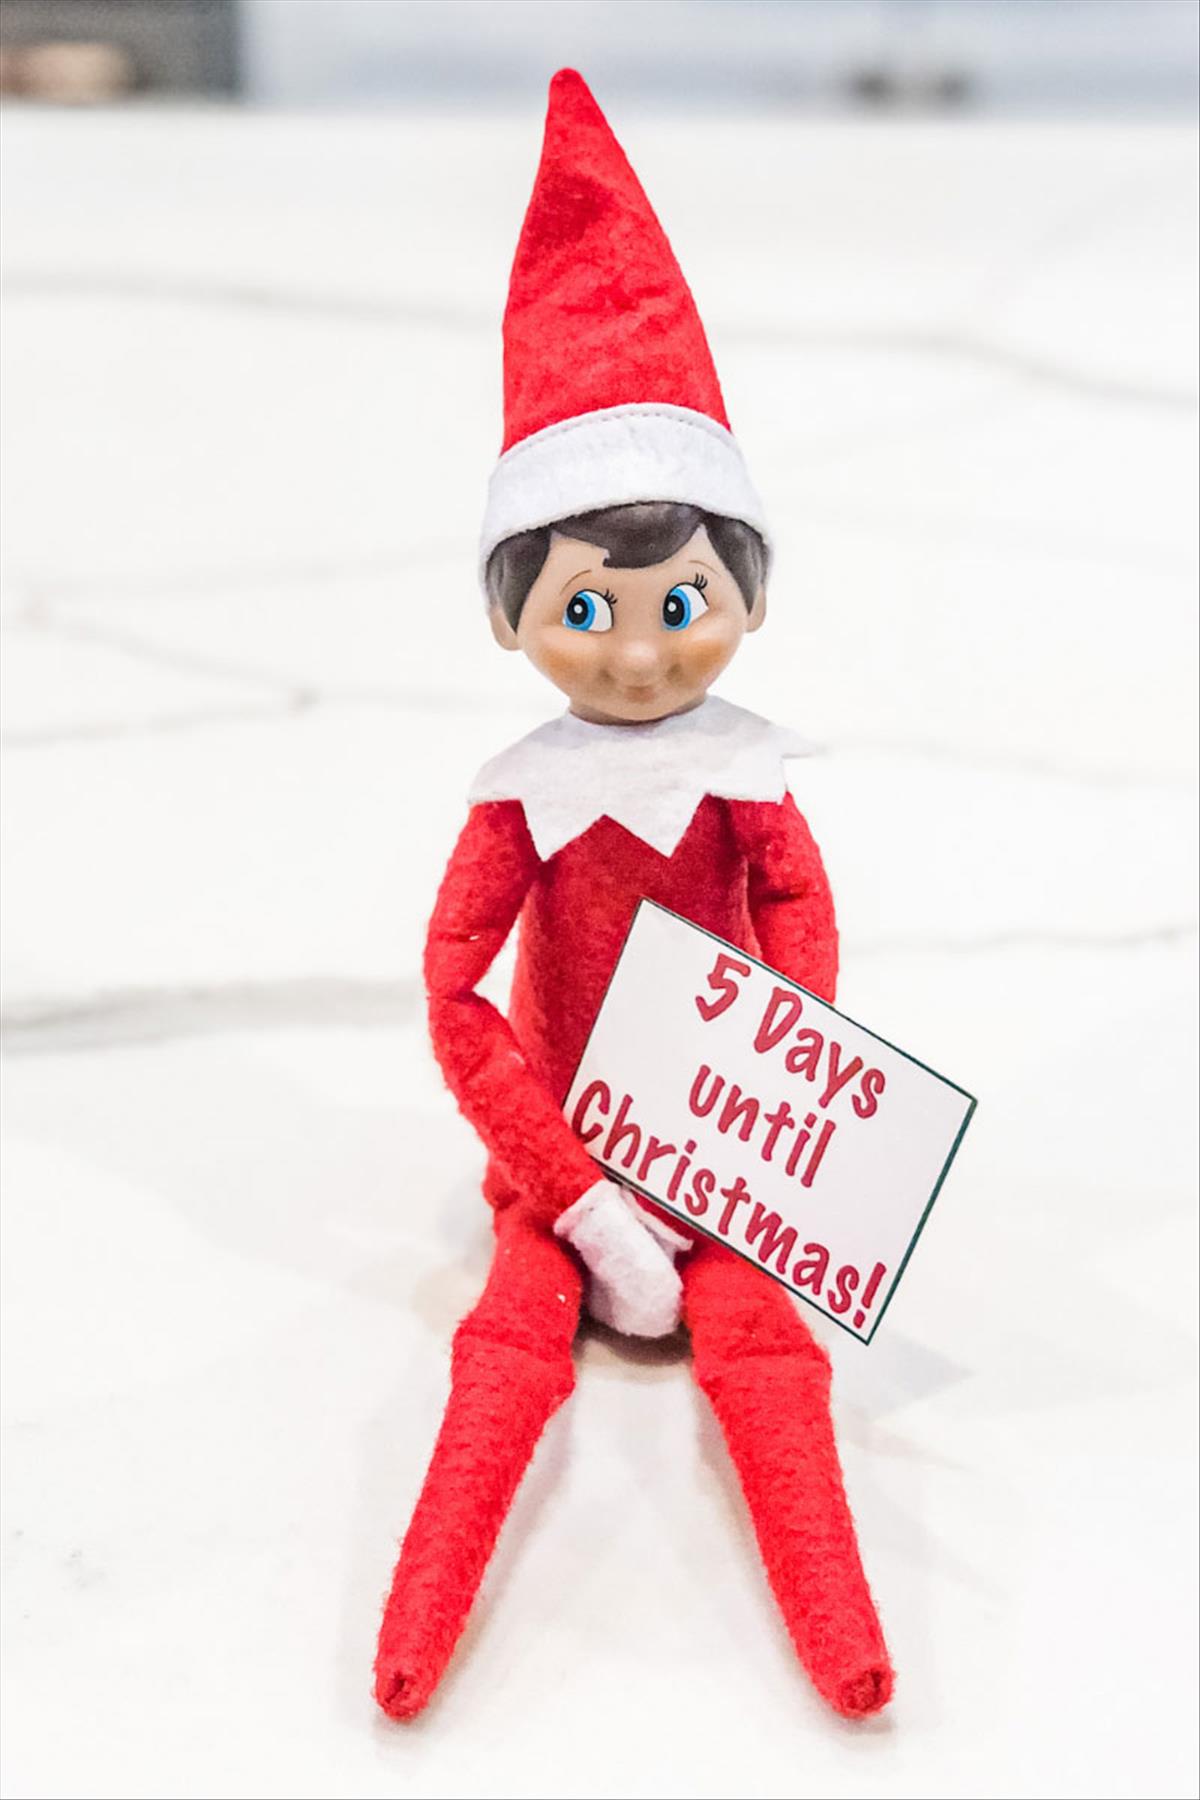 Funny Elf on the shelf ideas for Christmas decoration 2021